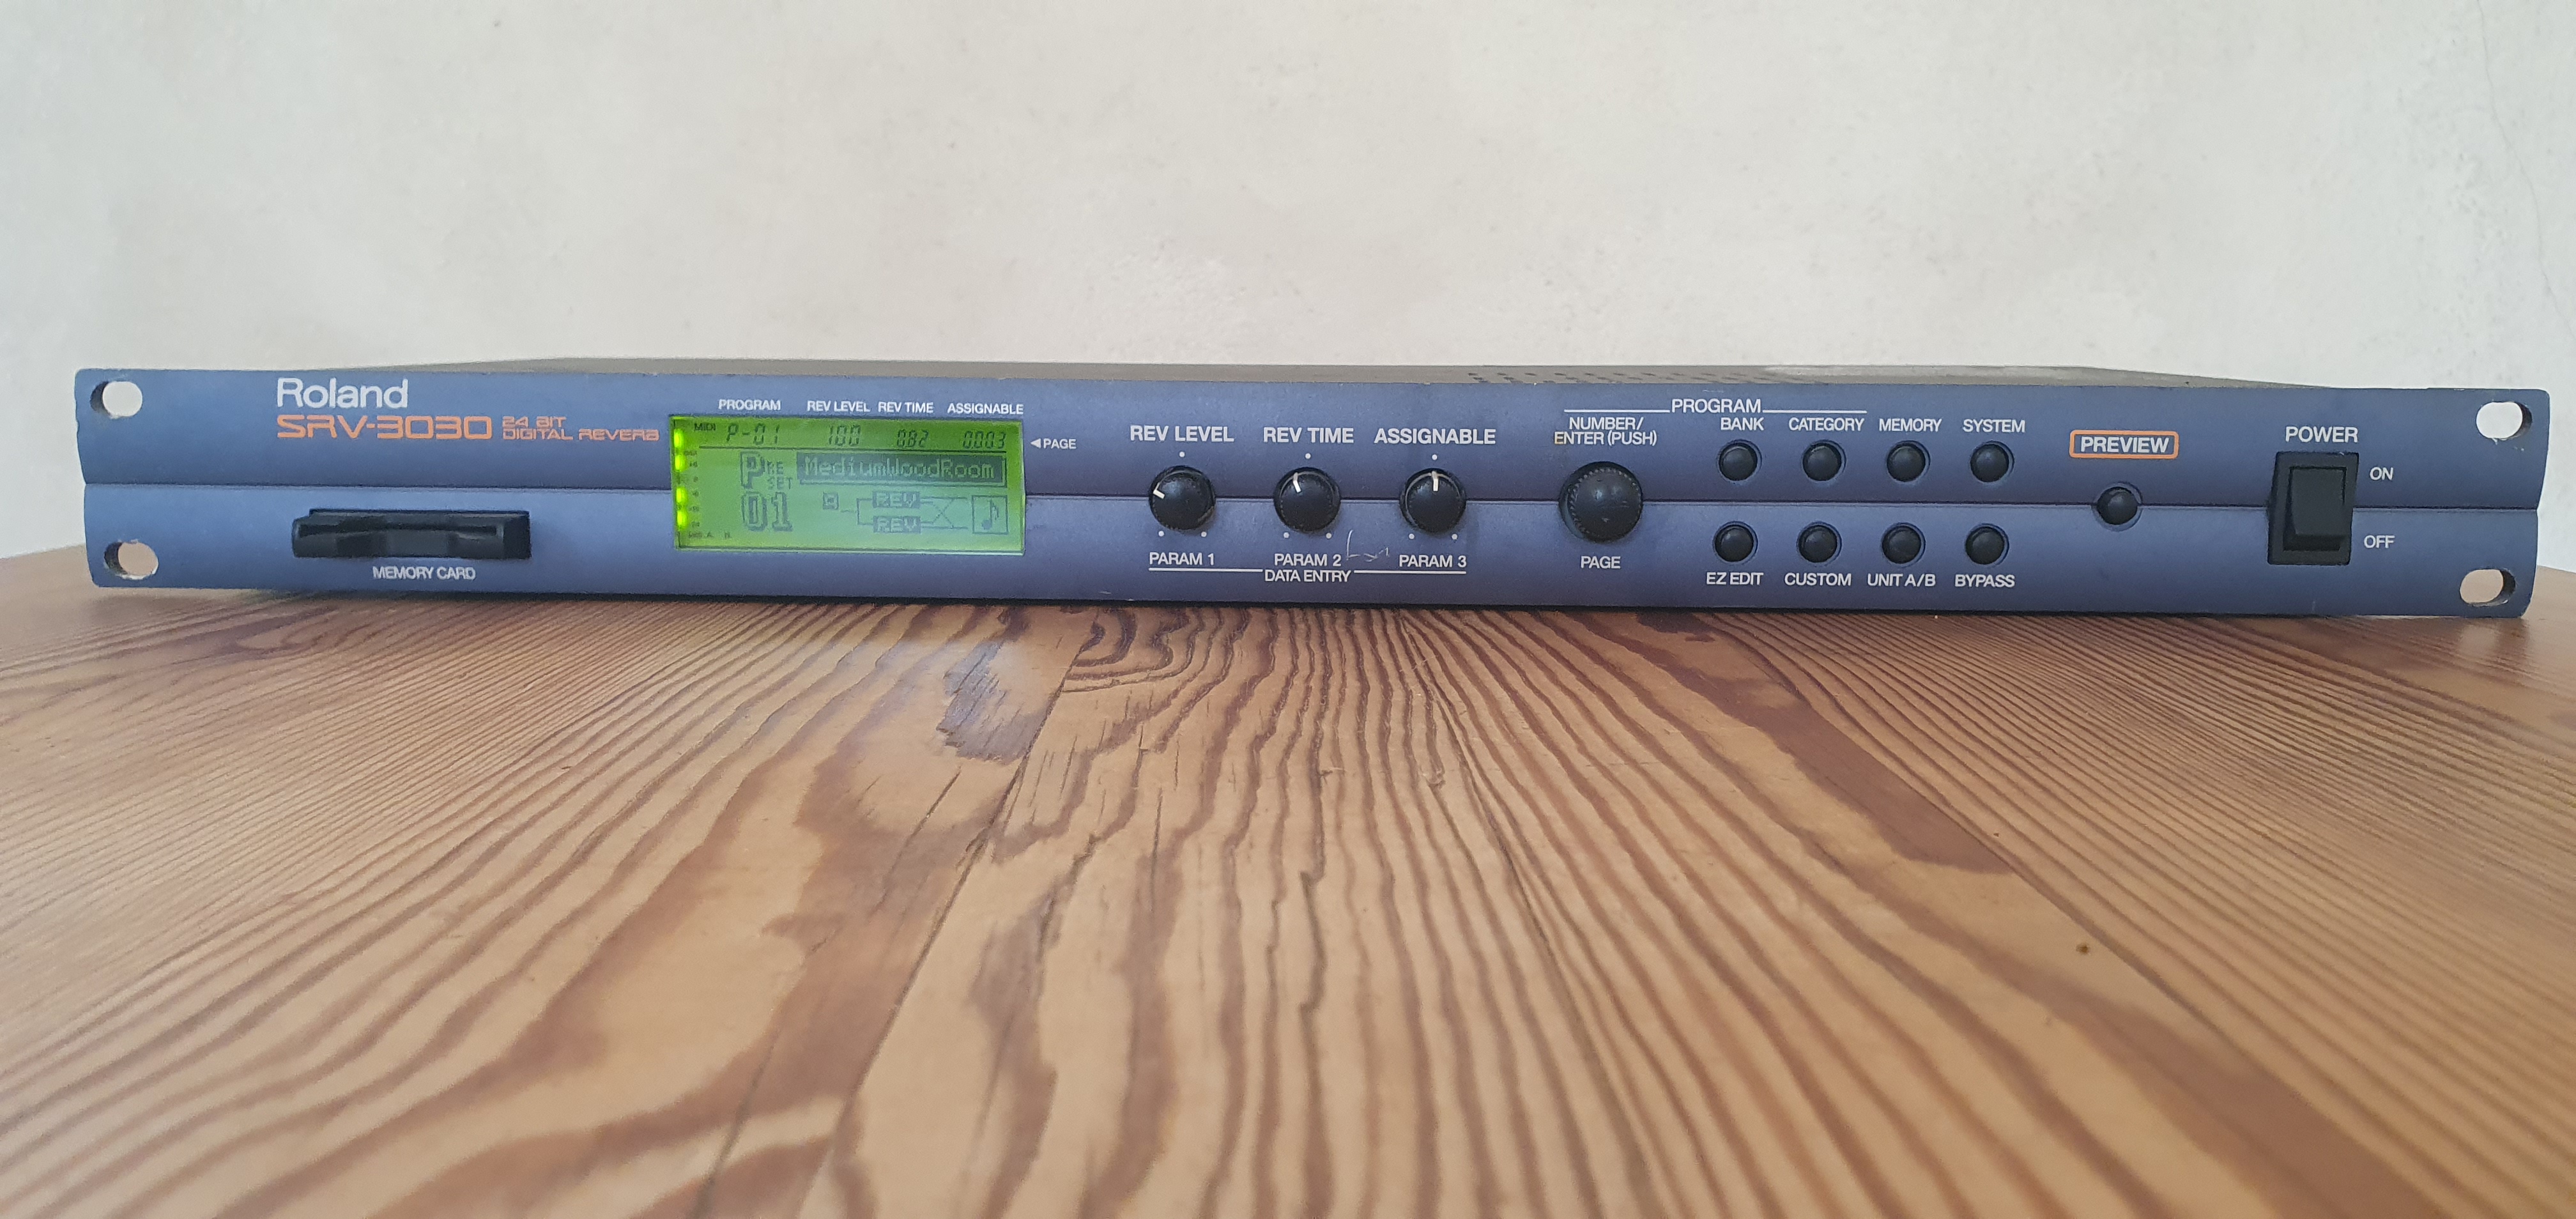 SRV-3030D - Roland SRV-3030D - Audiofanzine